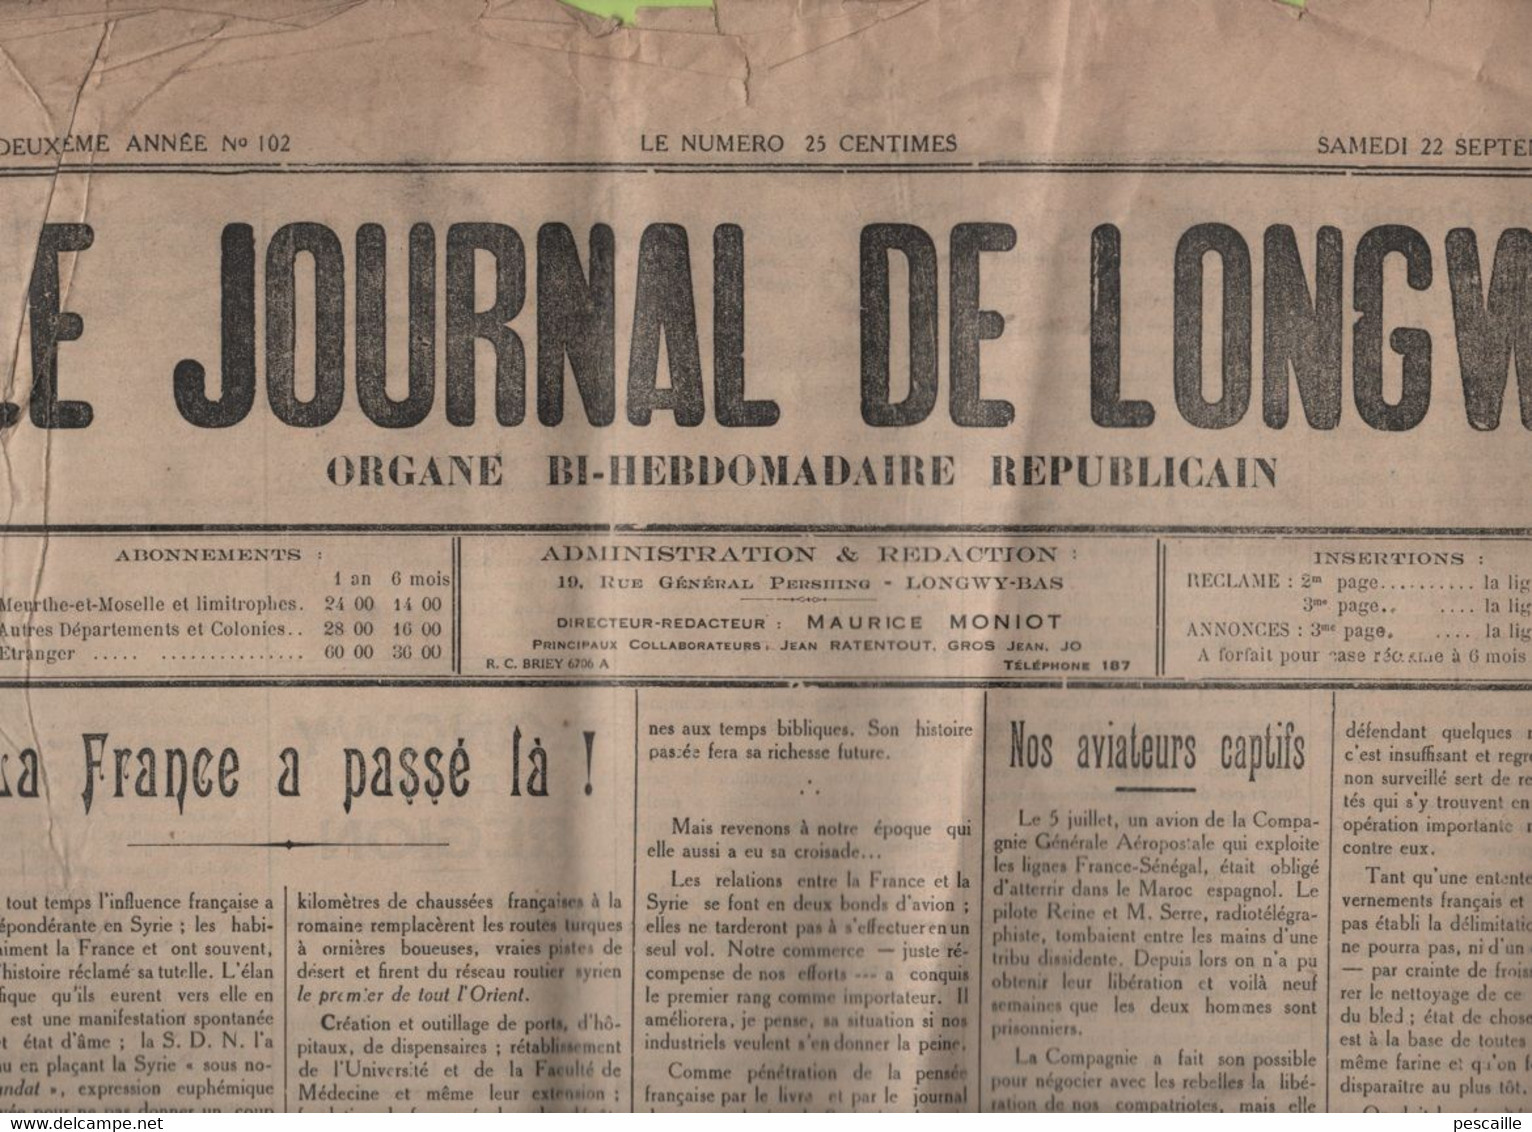 LE JOURNAL DE LONGWY 22 09 1928 - SYRIE - AVIATEURS AEROPOSTALE CAPTIFS MAROC ESPAGNOL - ECLAIREURS DE FRANCE - COSNES . - Testi Generali